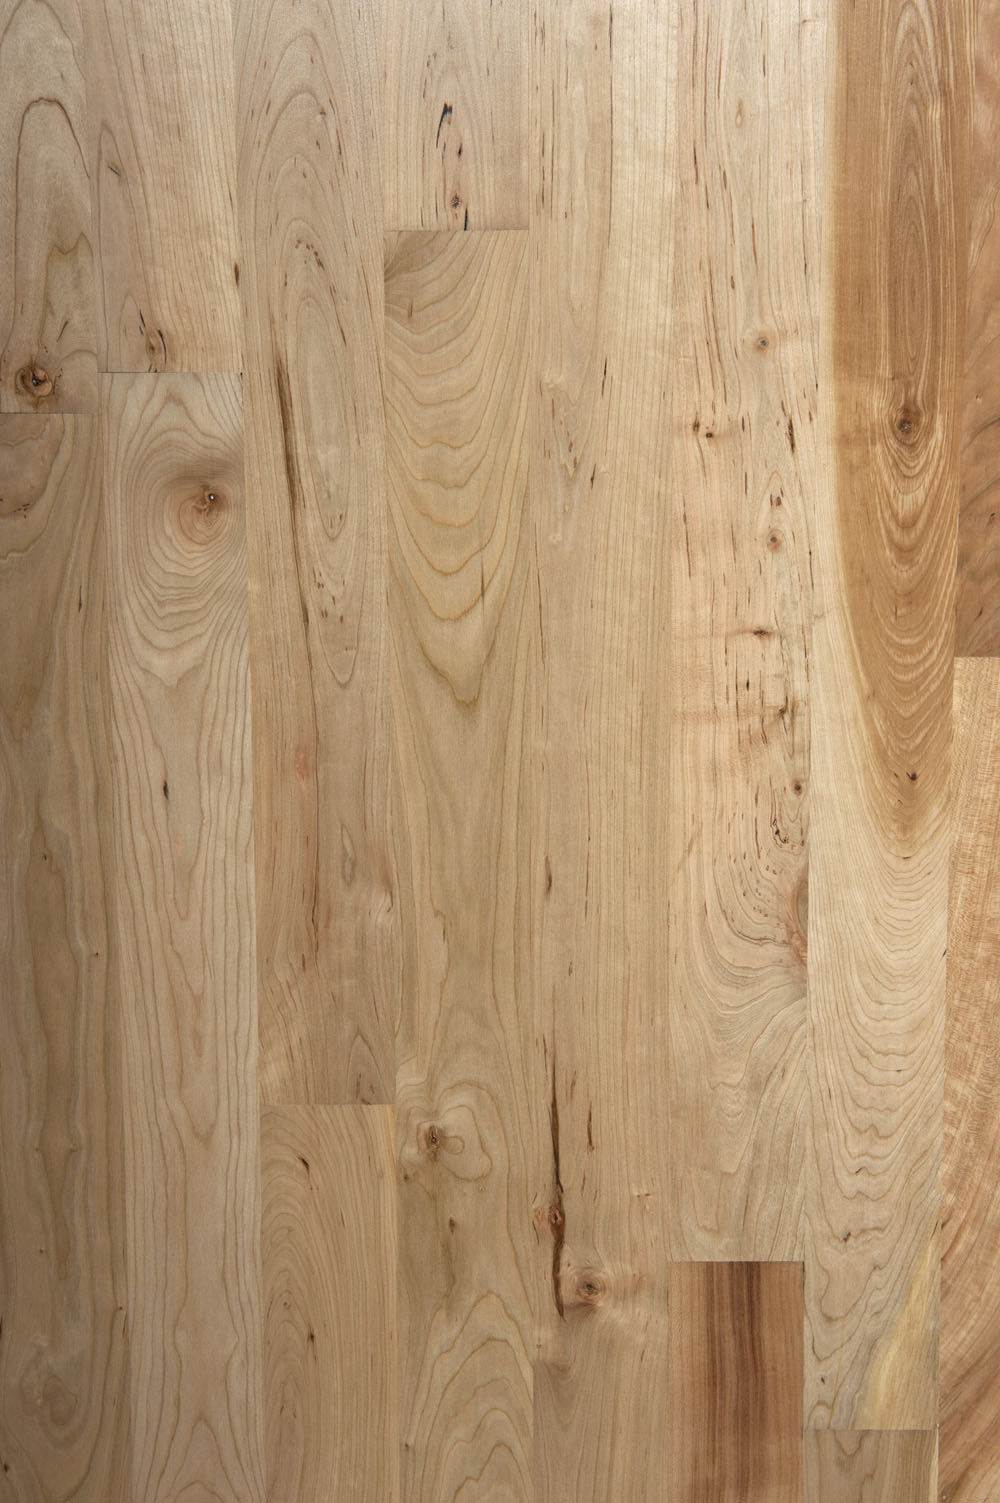 Unfinished American Cherry Boardwalk, American Cherry Hardwood Flooring Hardness